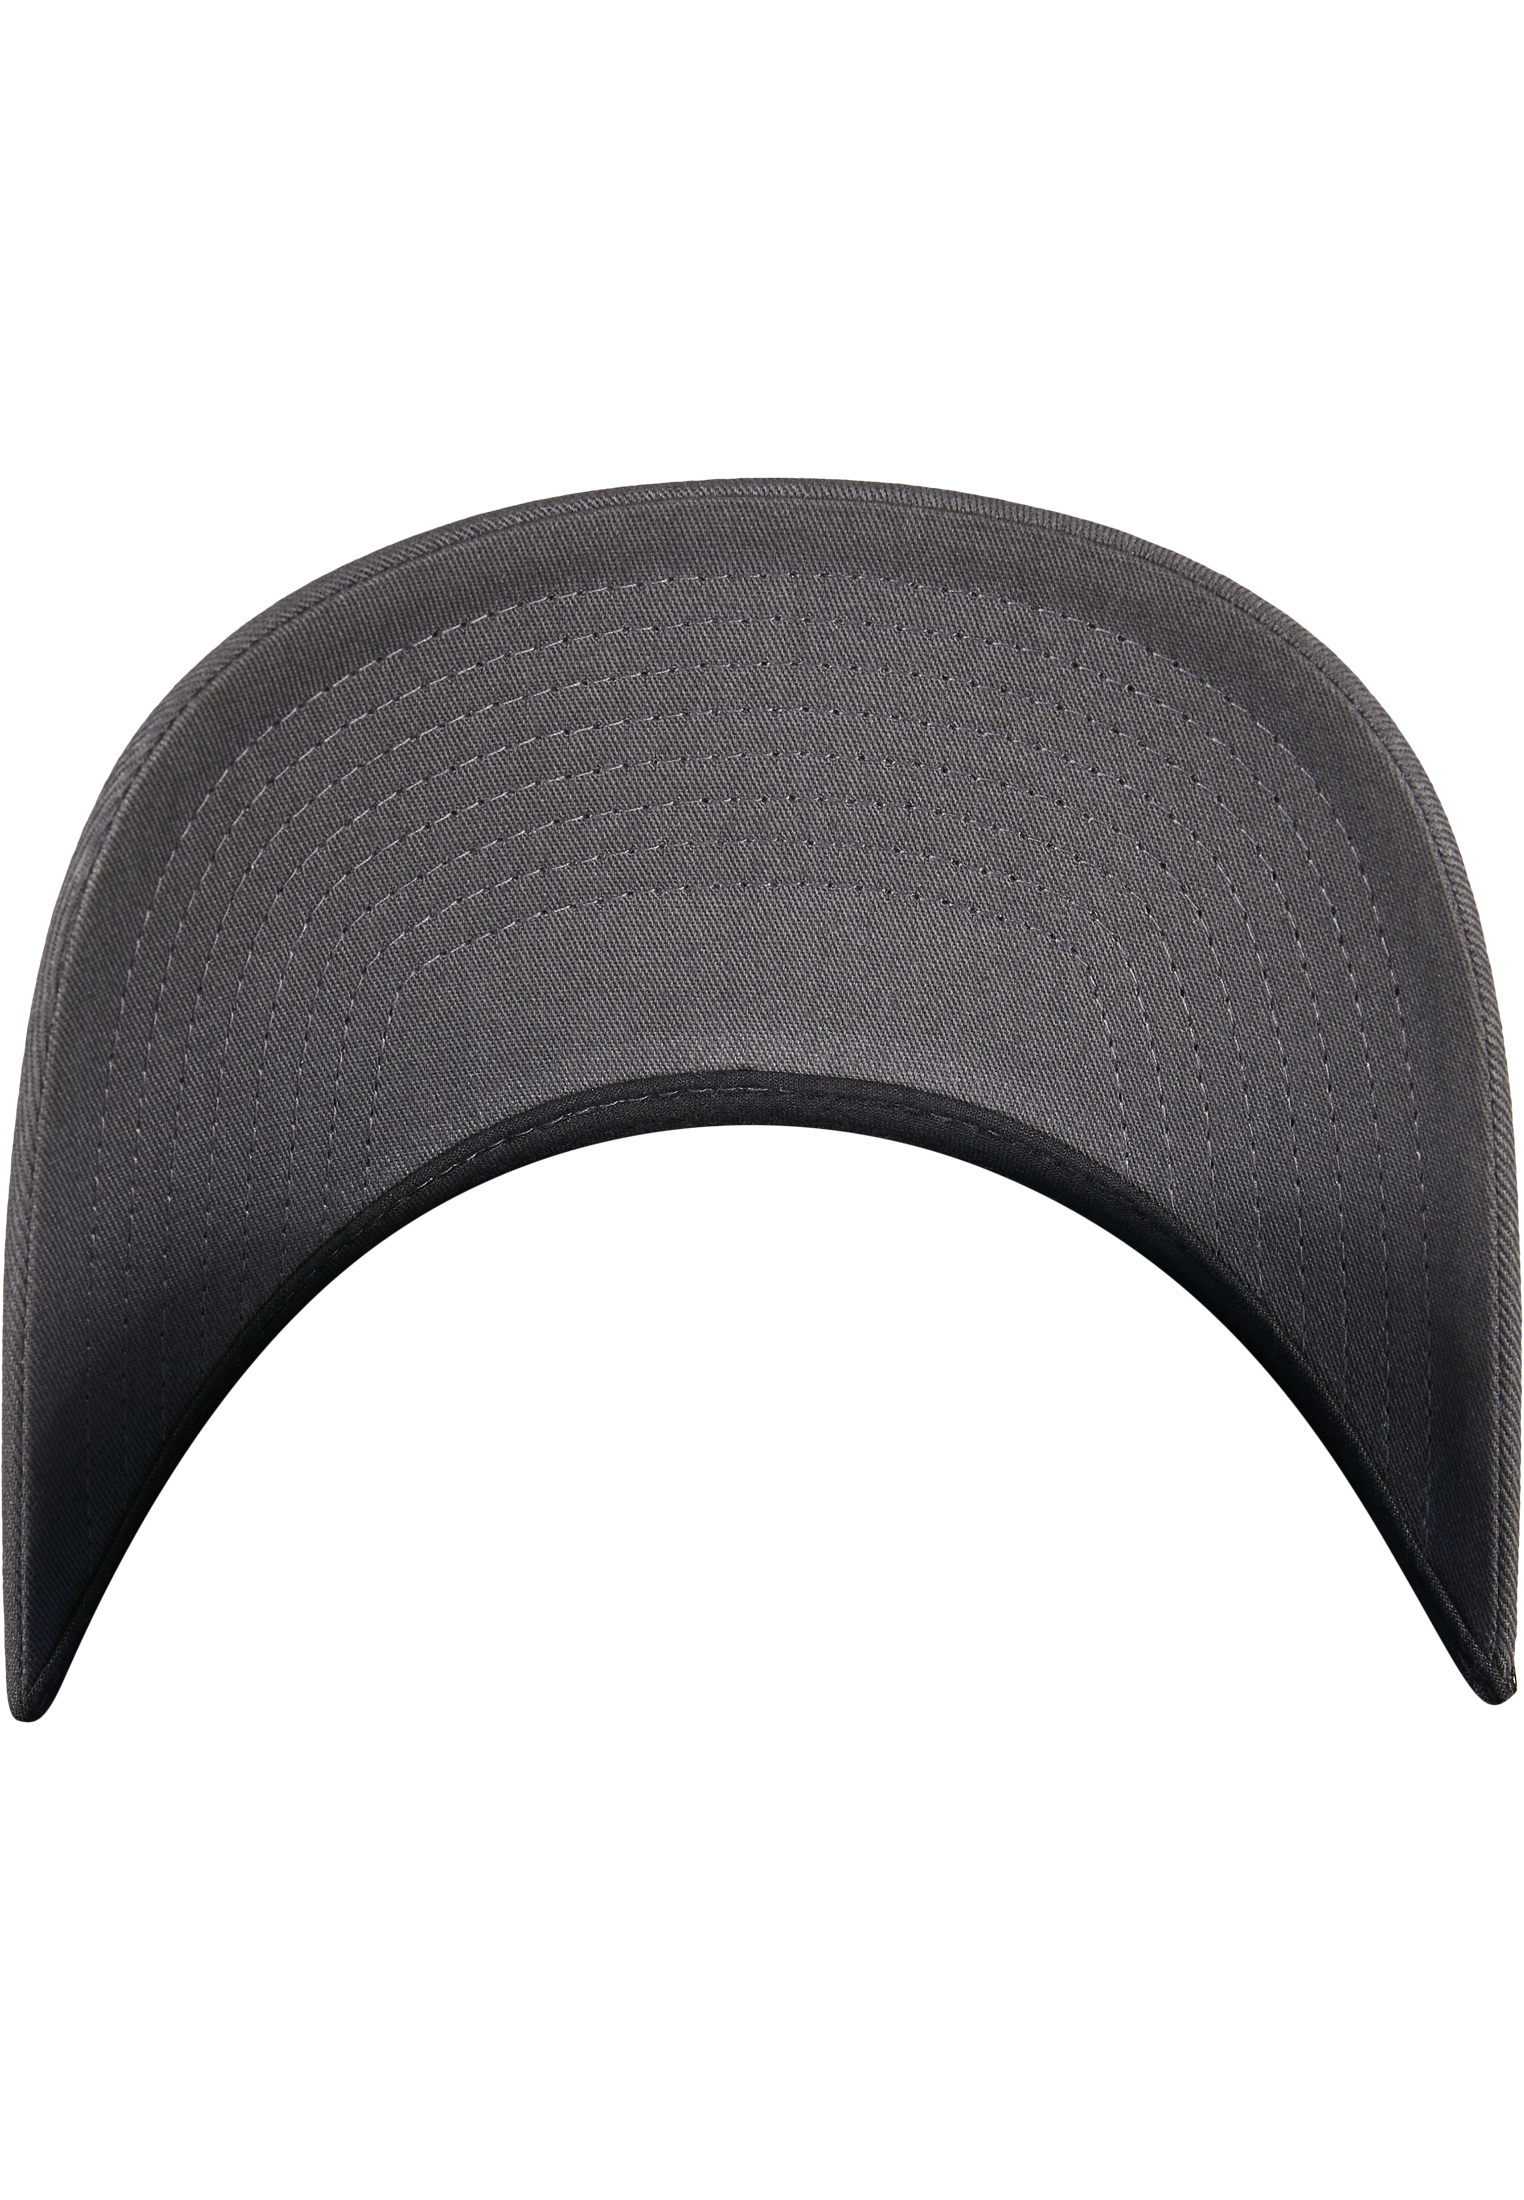 Neue Kollektion YP CLASSICS RECYCLED RETRO TRUCKER CAP 2-TONE in Farbe charcoal/black